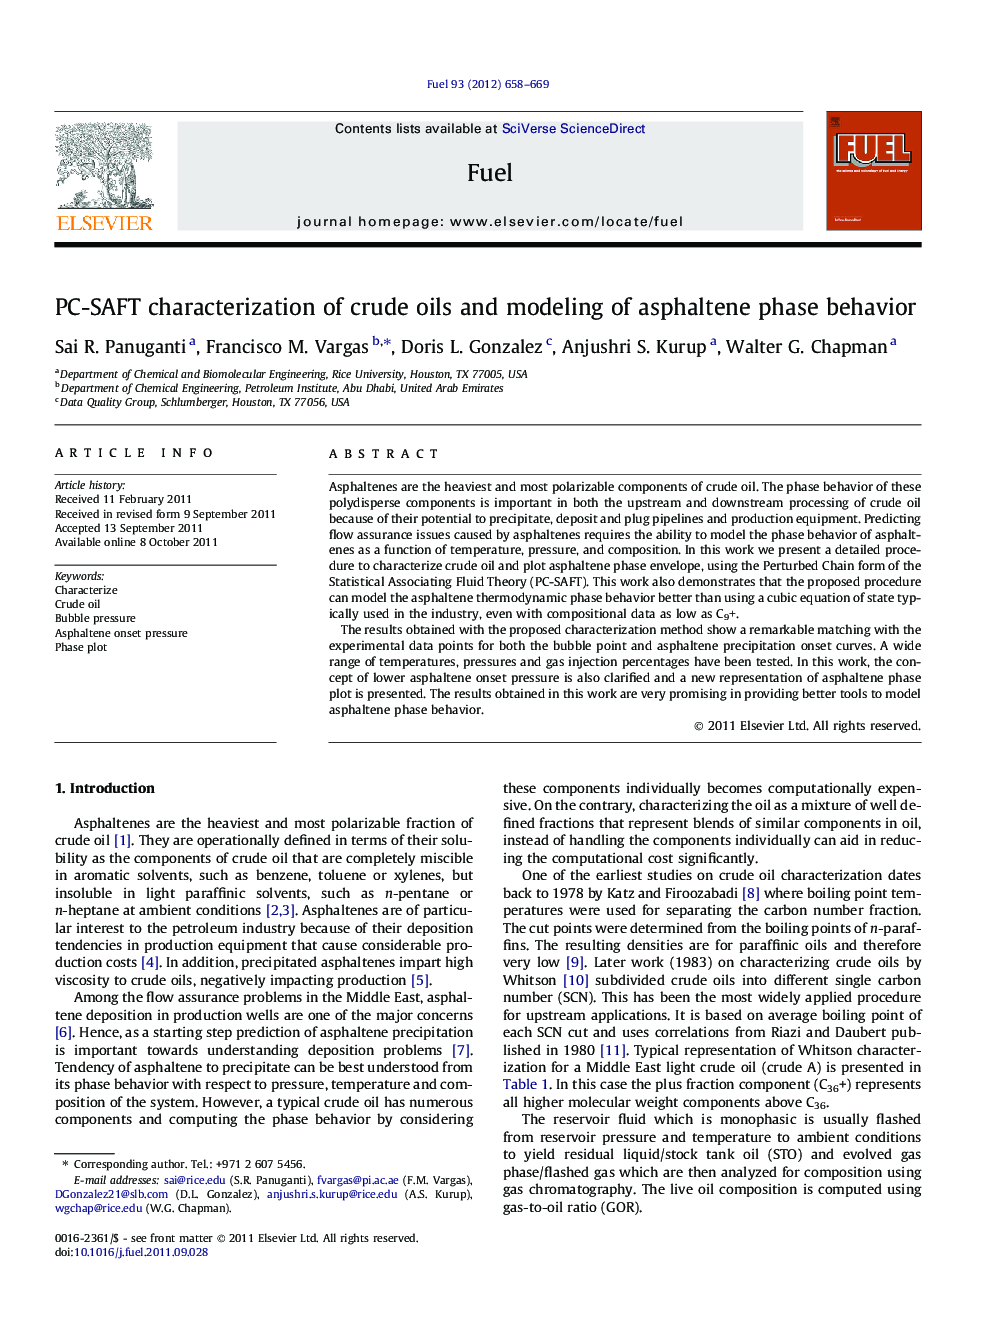 PC-SAFT characterization of crude oils and modeling of asphaltene phase behavior